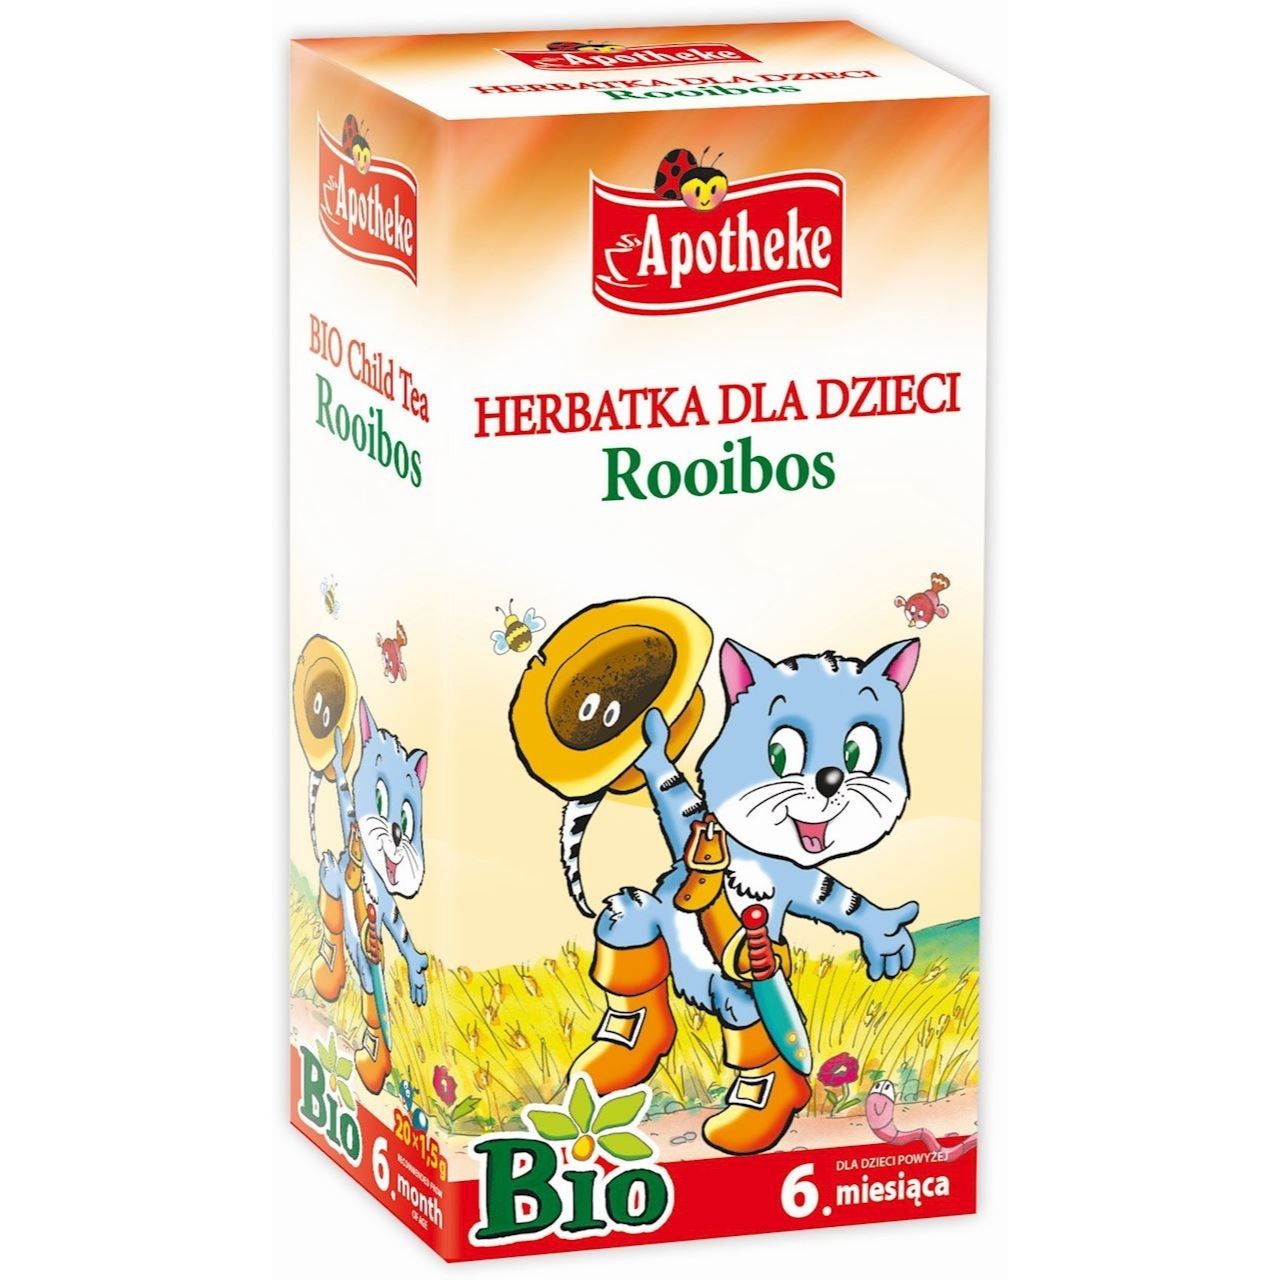 Herbata dla dzieci - rooibos BIO (20 x 1,5 g) 30 g - Apotheke